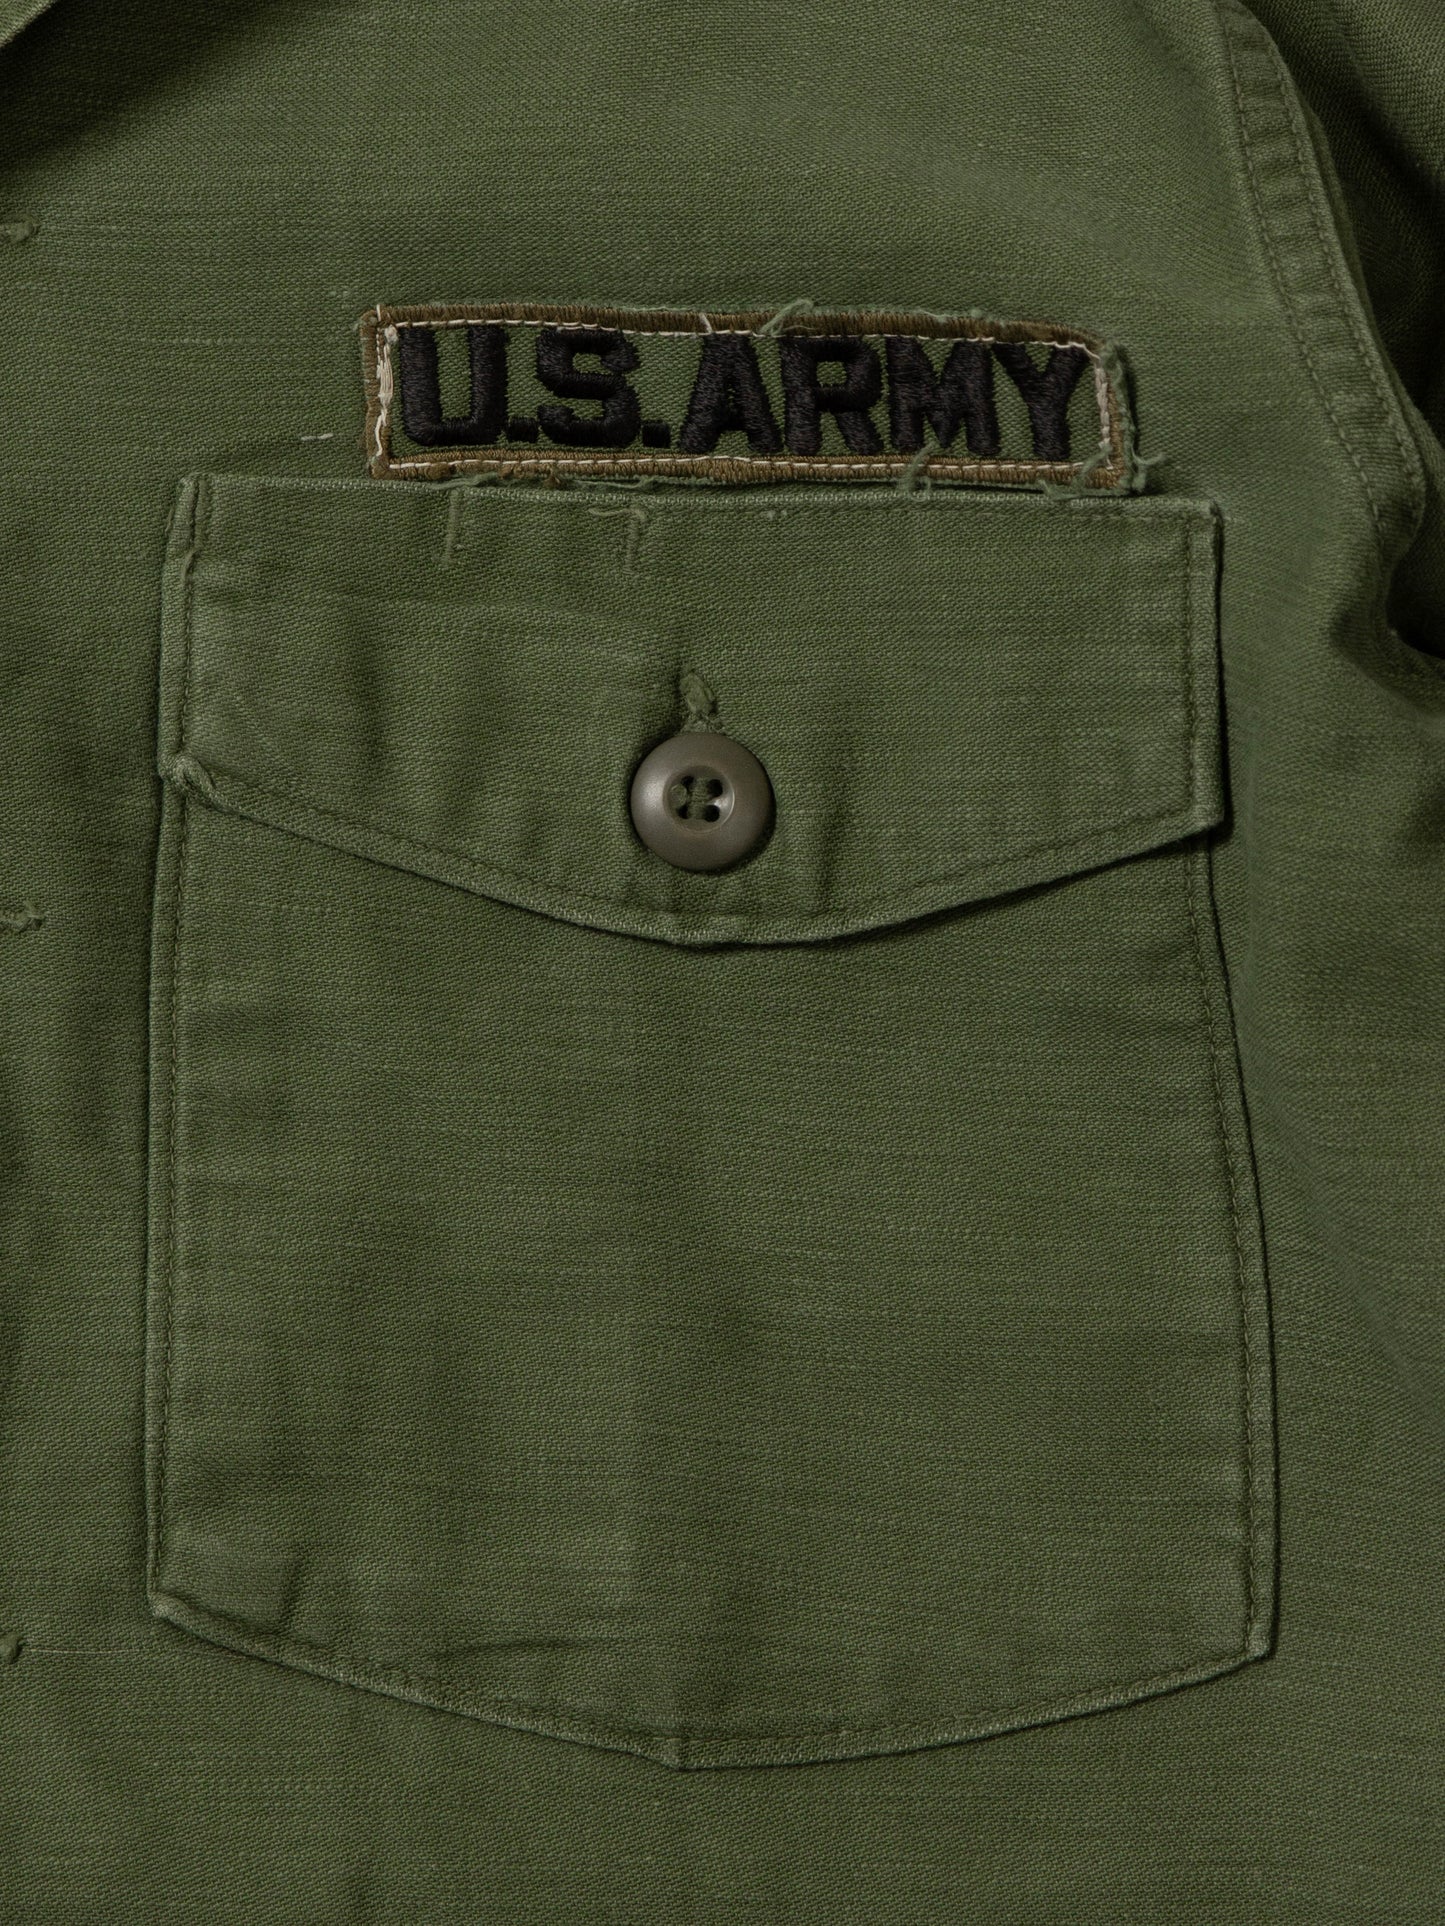 Vtg 1970s US Army OG-107 Fatigue Shirt (S)